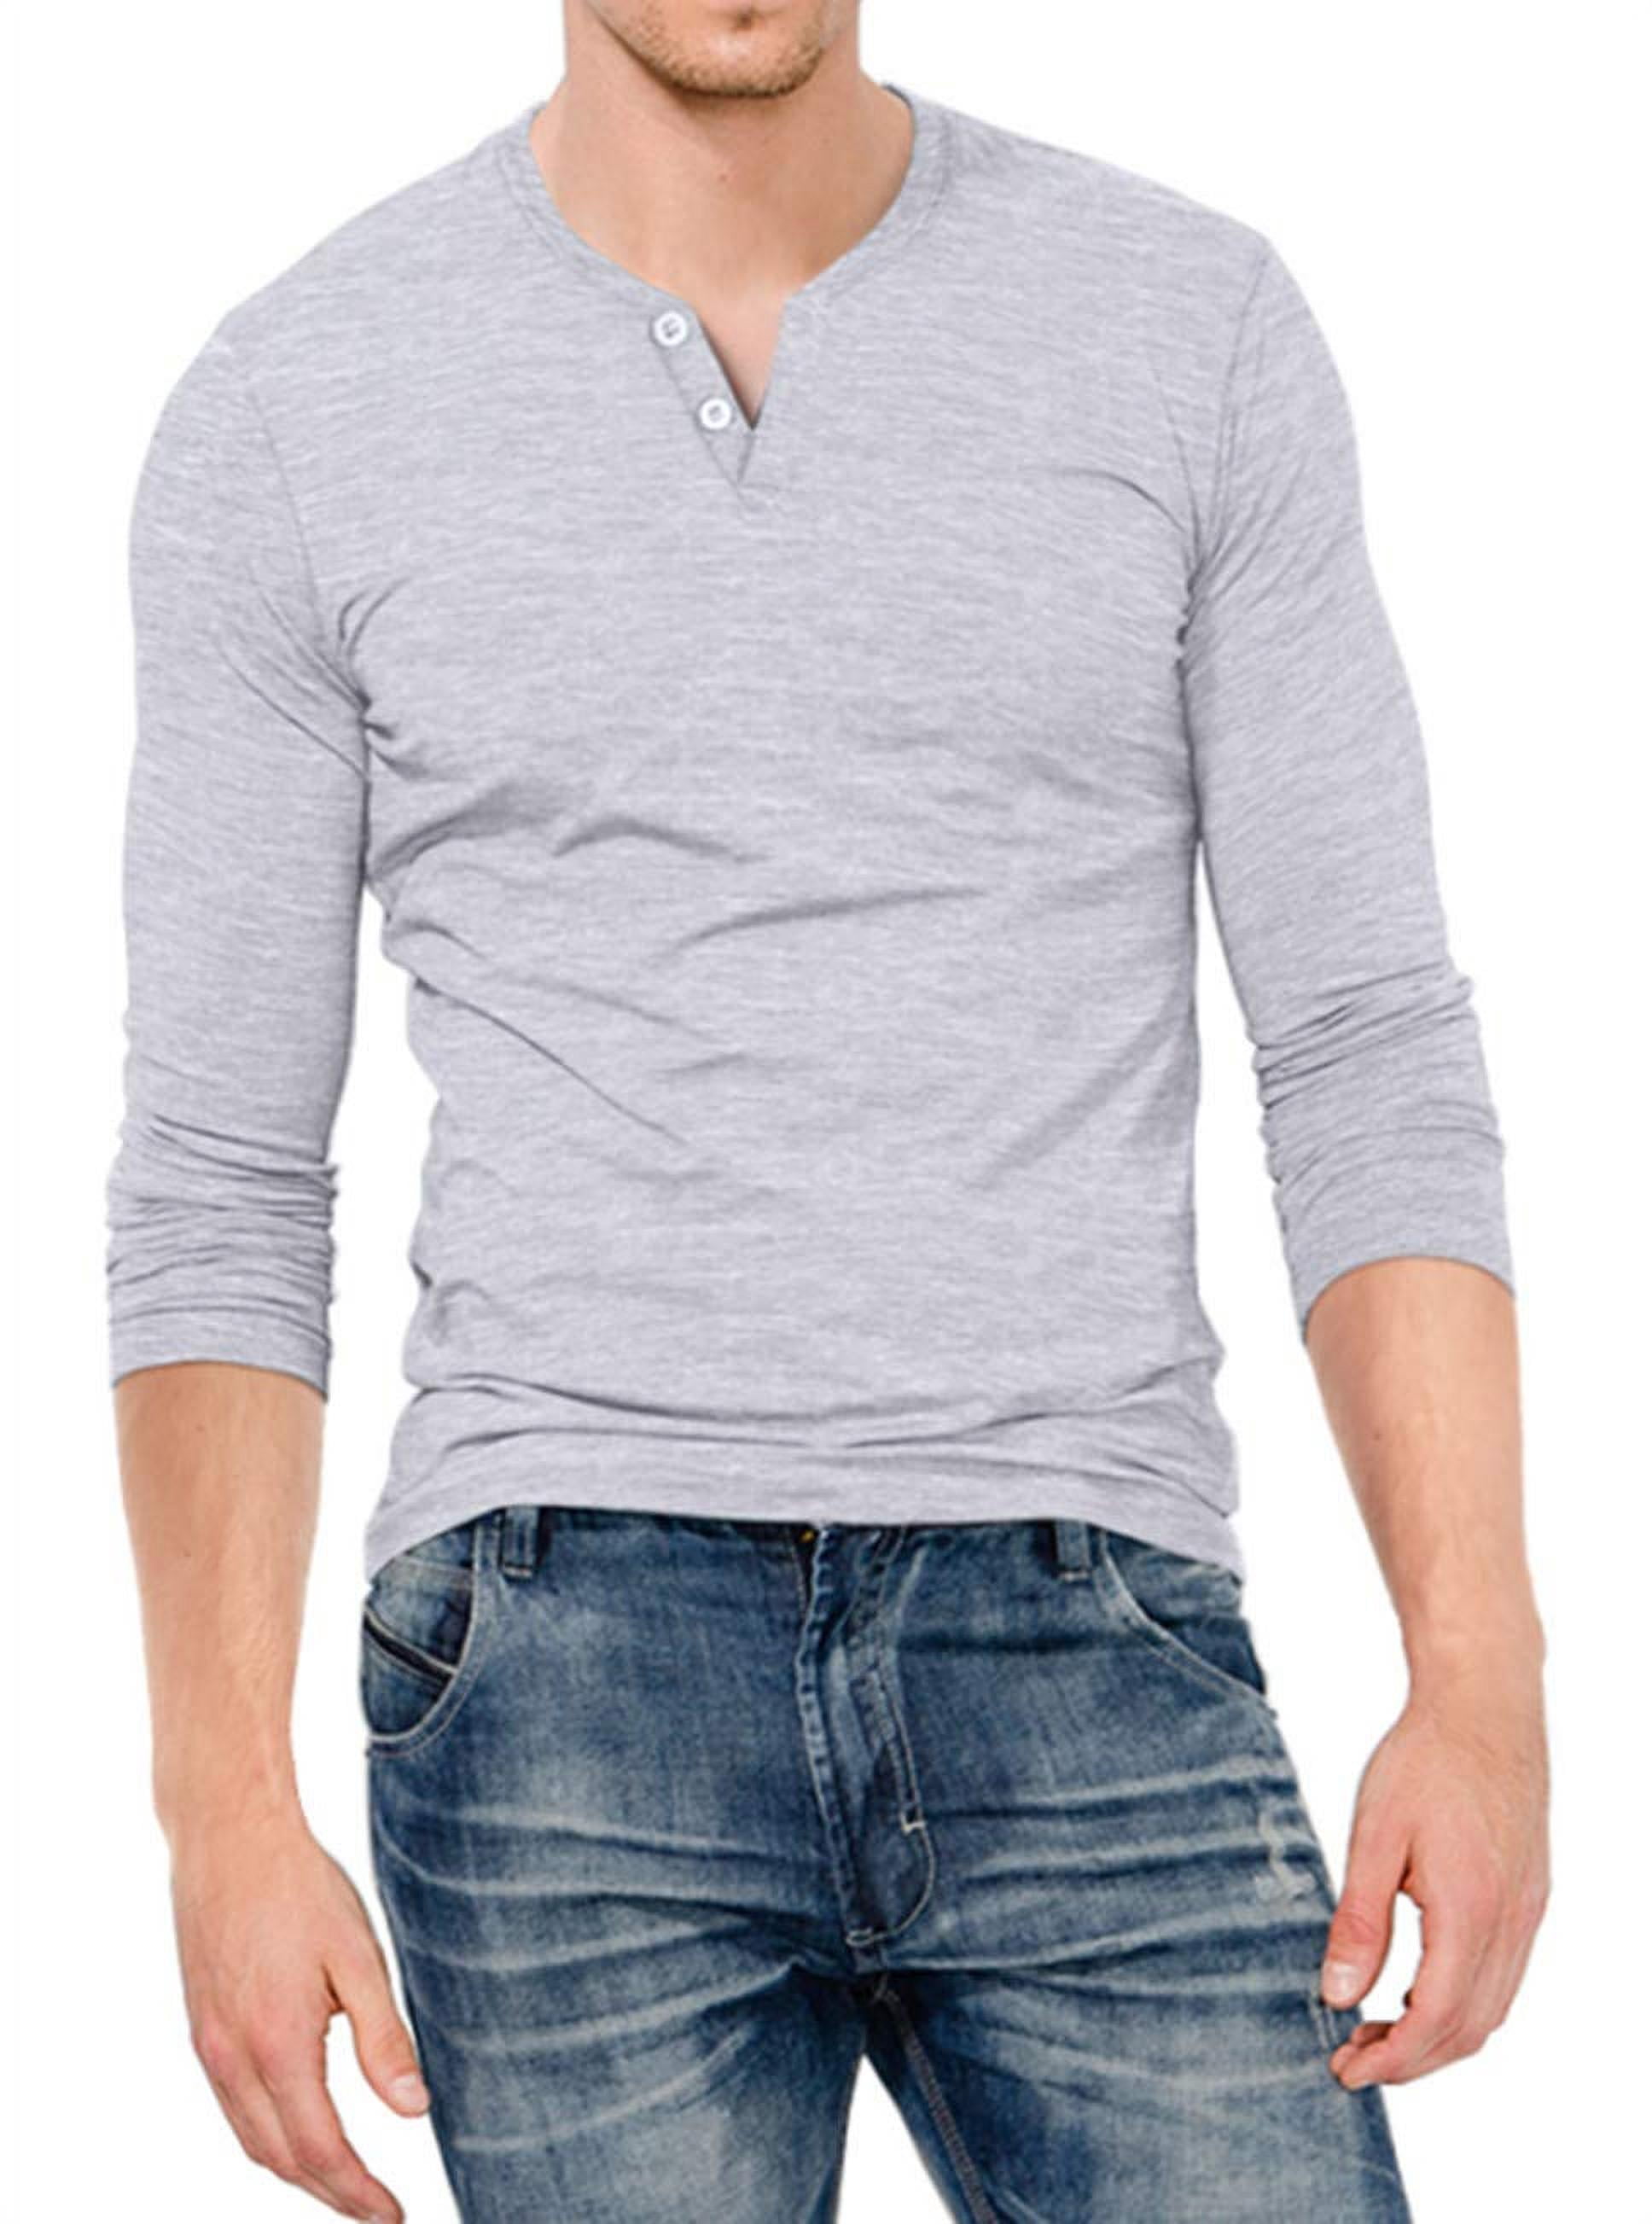 AIYINO Men's Casual Slim Fit Short Sleeve Henley T-Shirts Cotton Shirts 2XL 09Acid Blue 